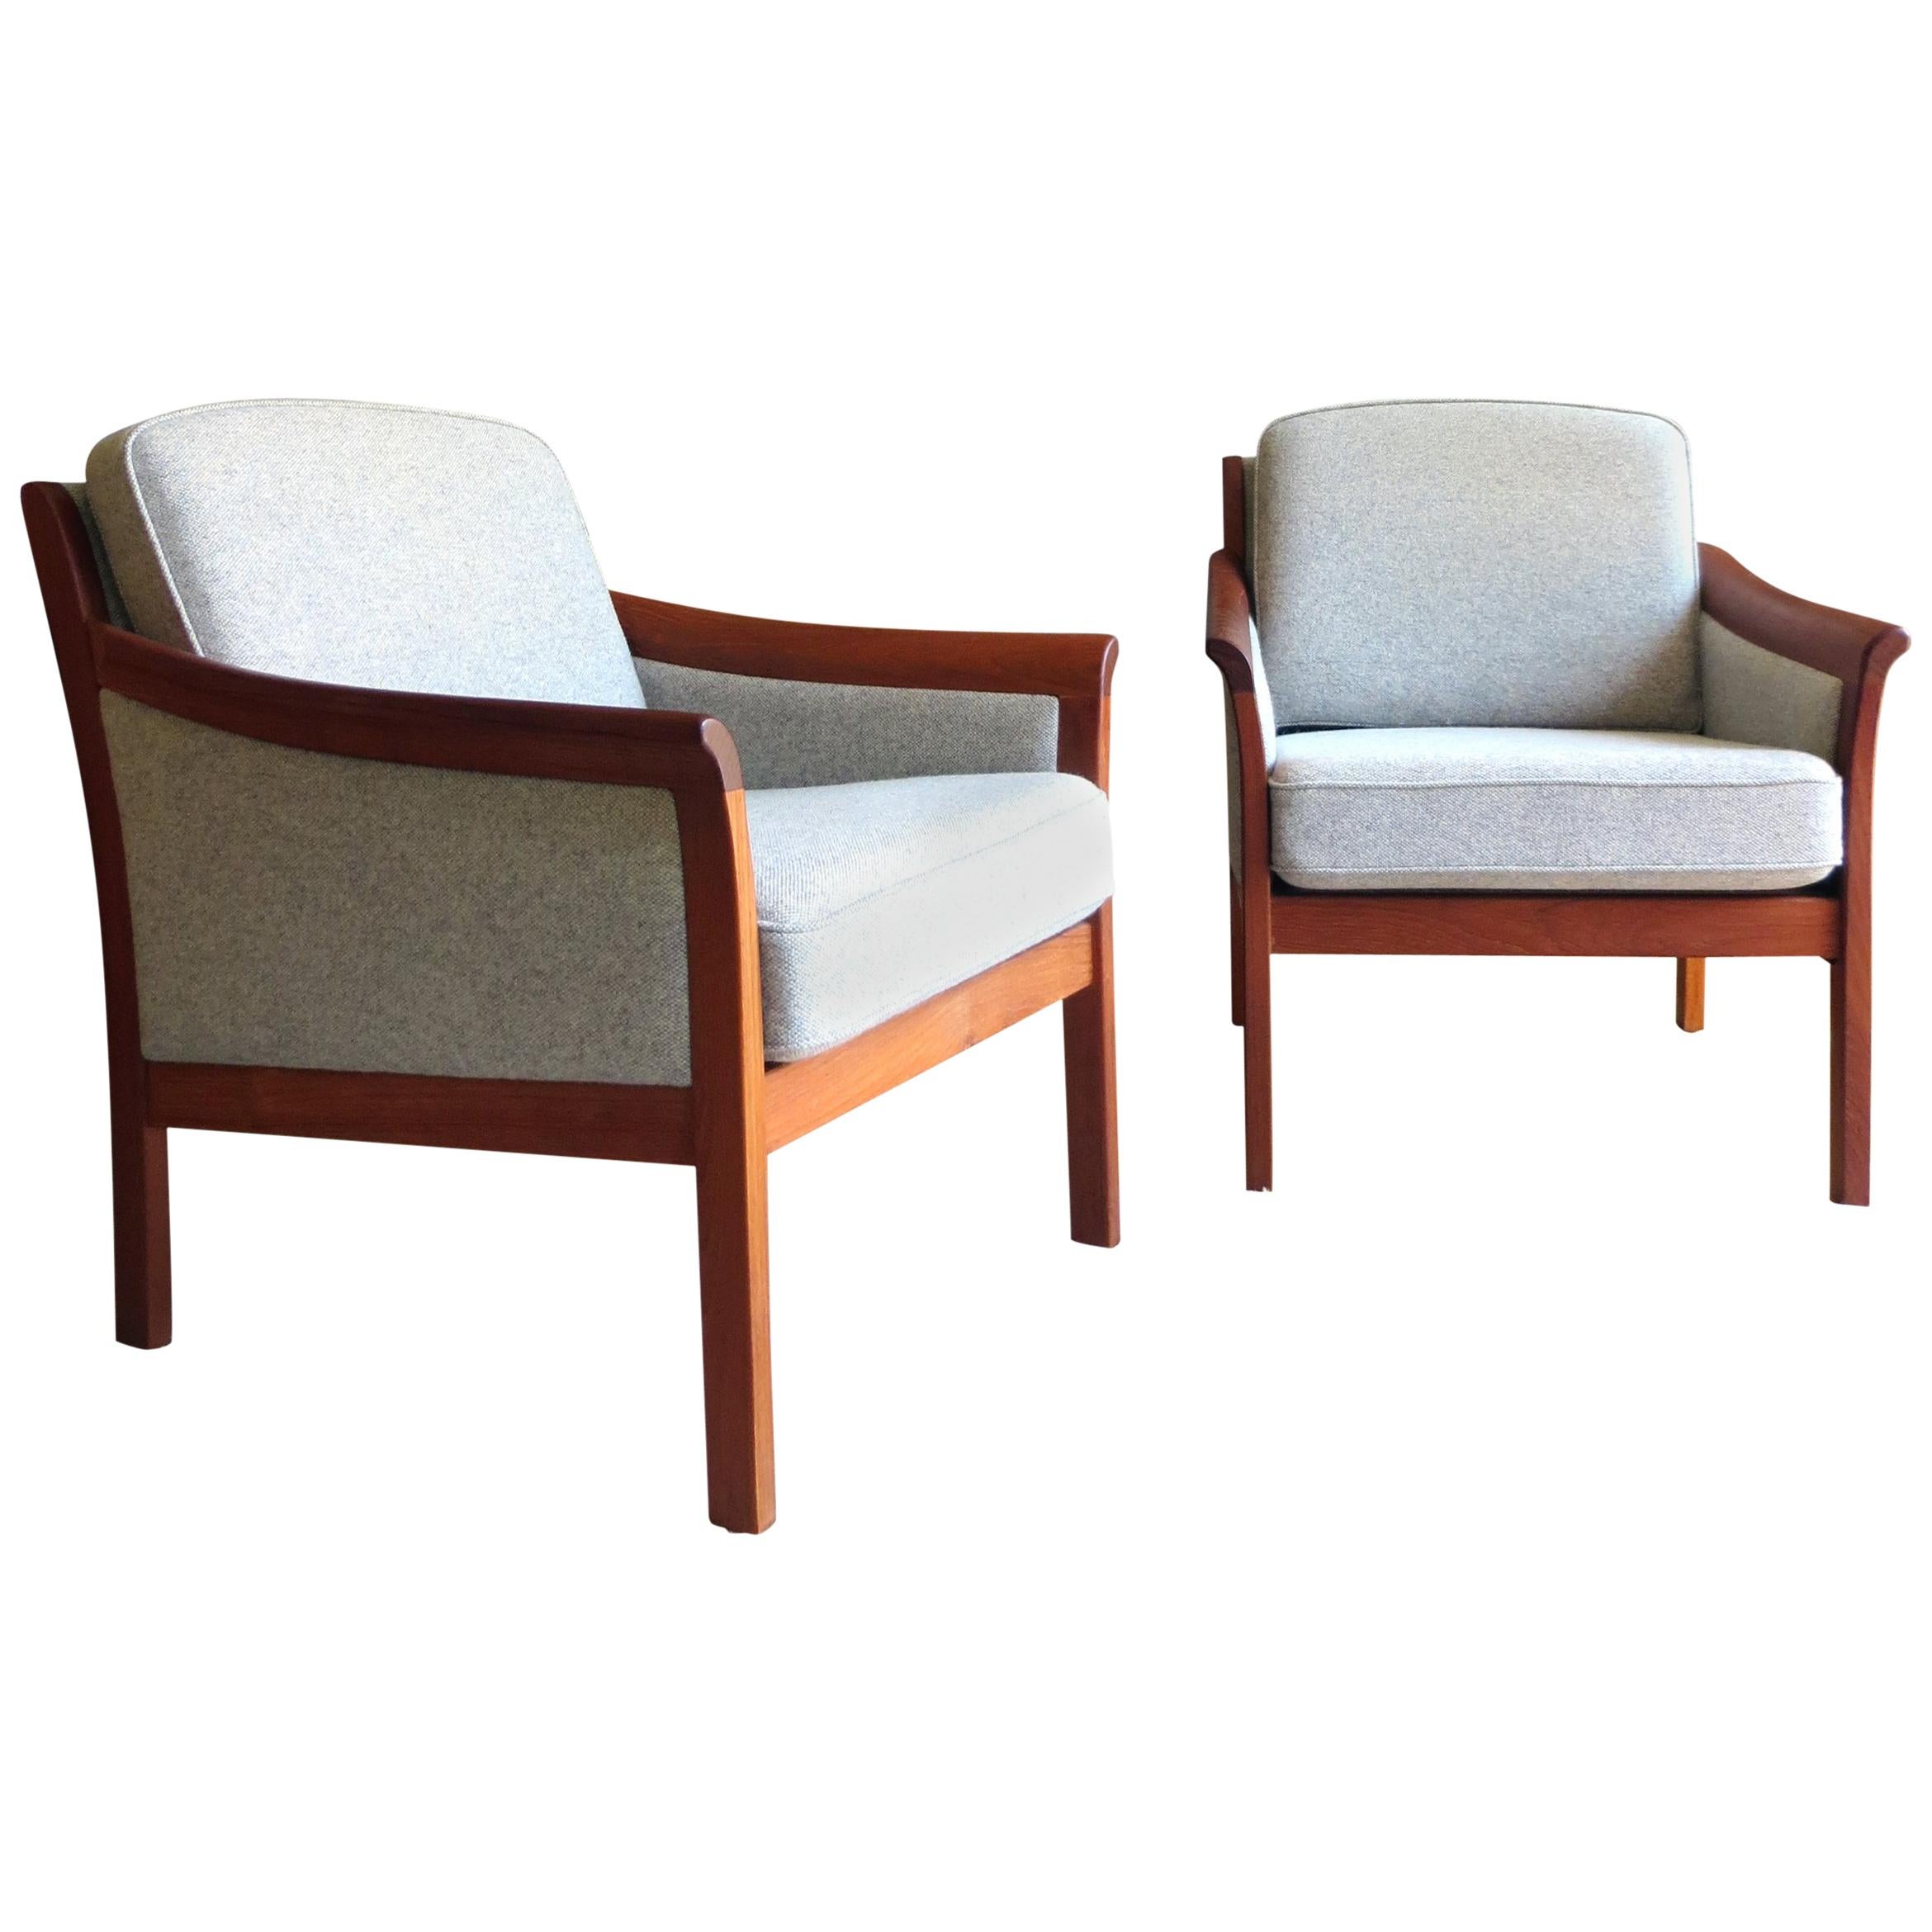 Danish Mid-Century Modern Solid Teak & Wool Easy Chairs Set in Grey-Beige, 1960s For Sale